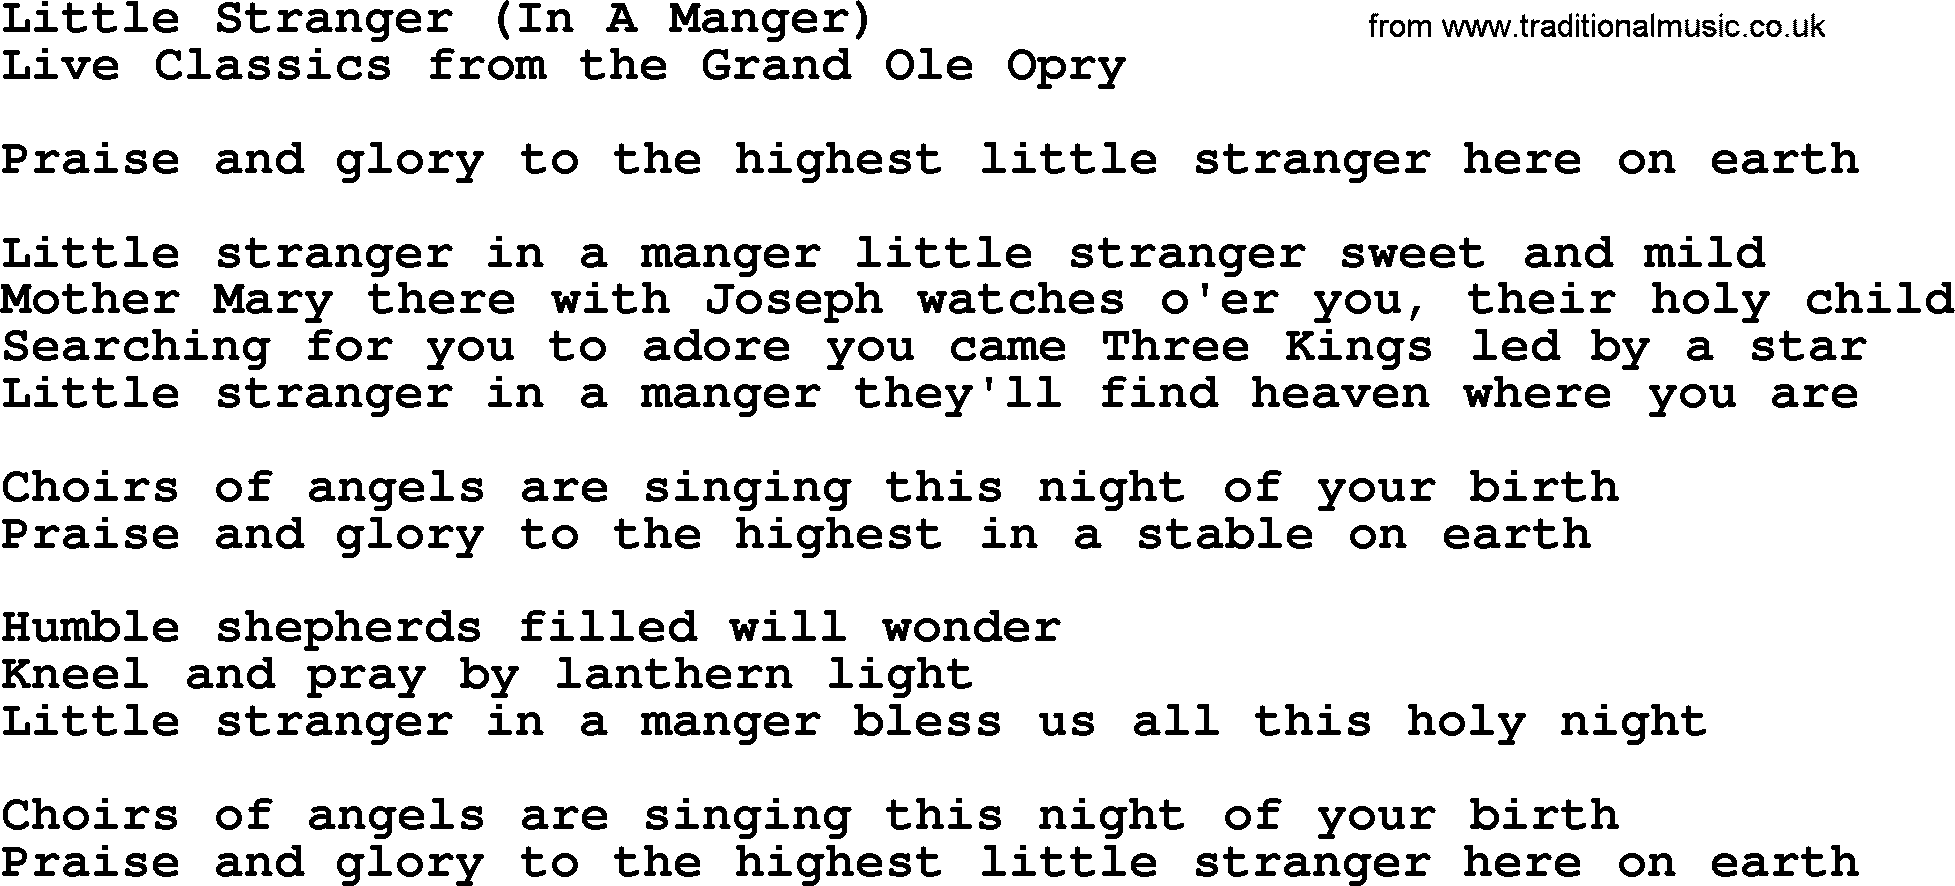 Marty Robbins song: Little Stranger In A Manger, lyrics